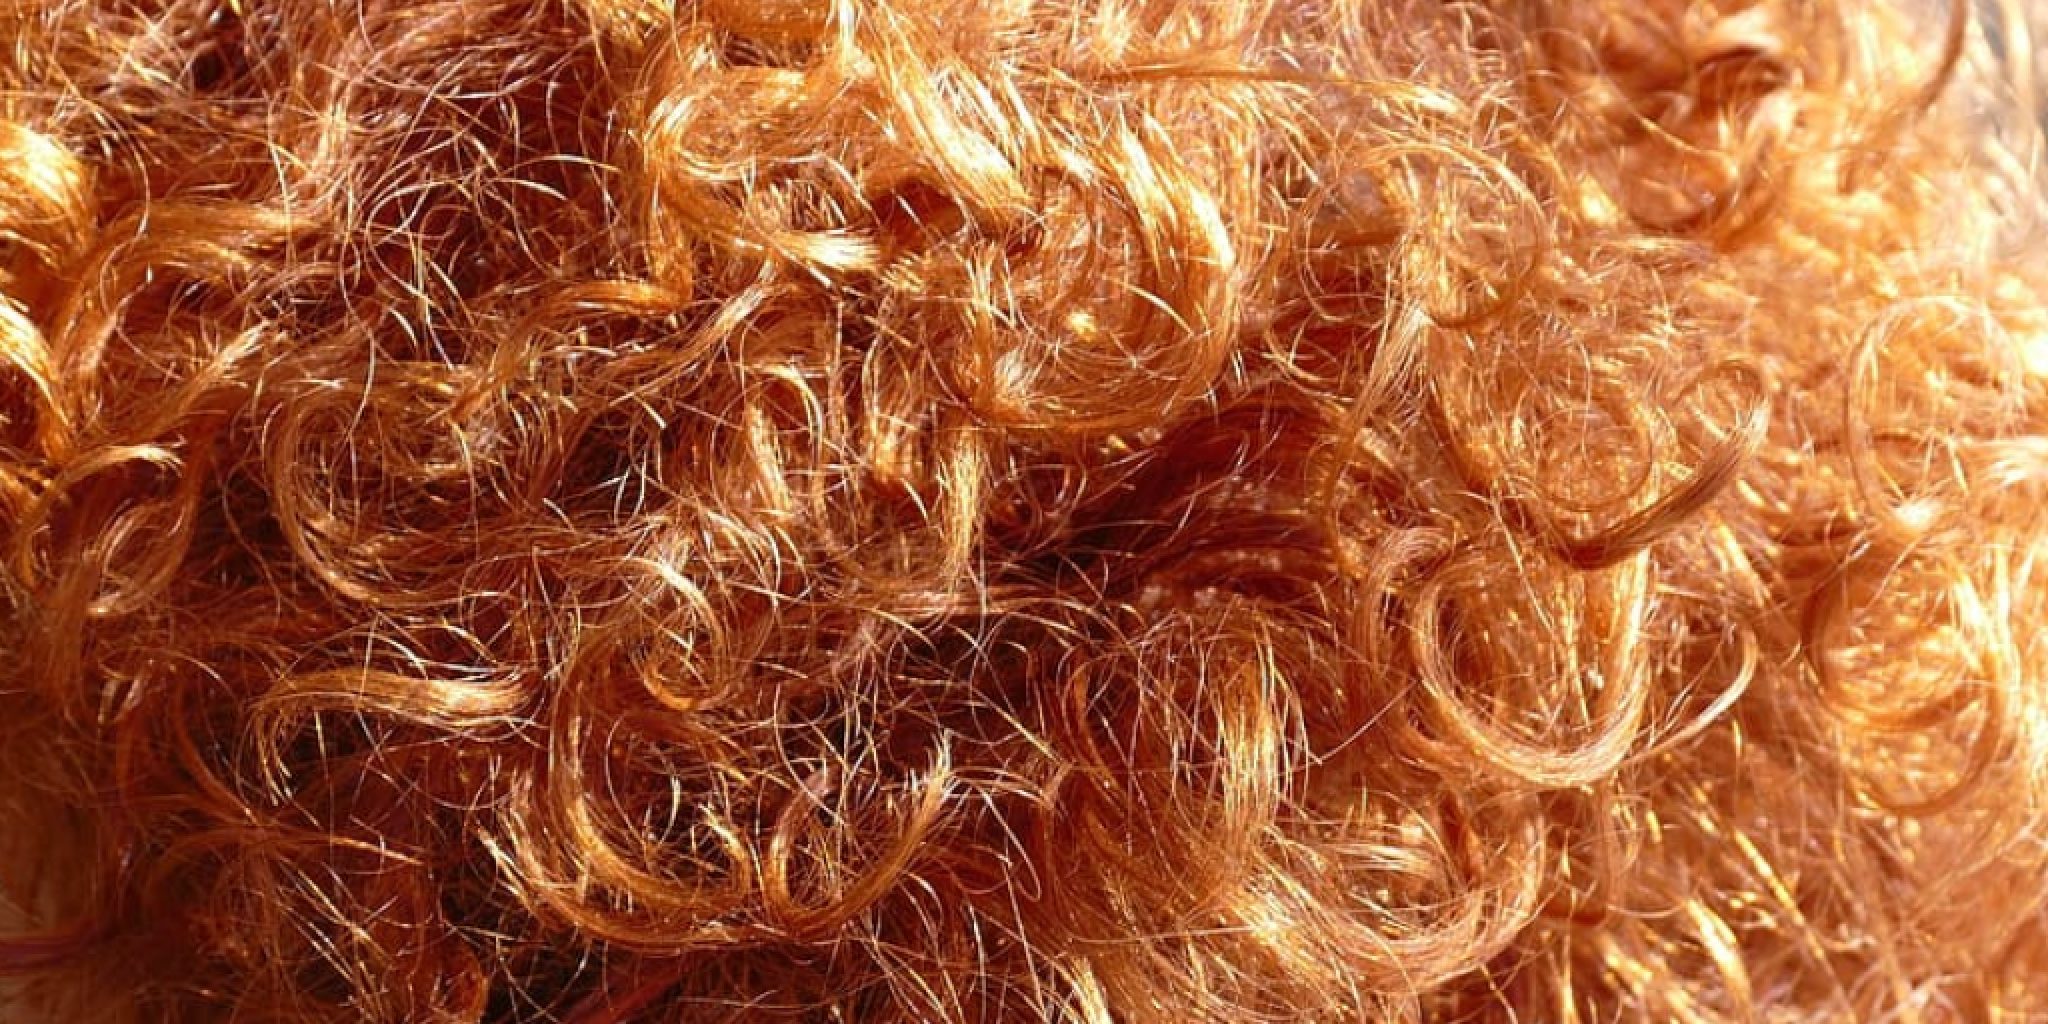 30 Best Shades of Blonde Hair Colors - Celebrity Blonde Hair - wide 4